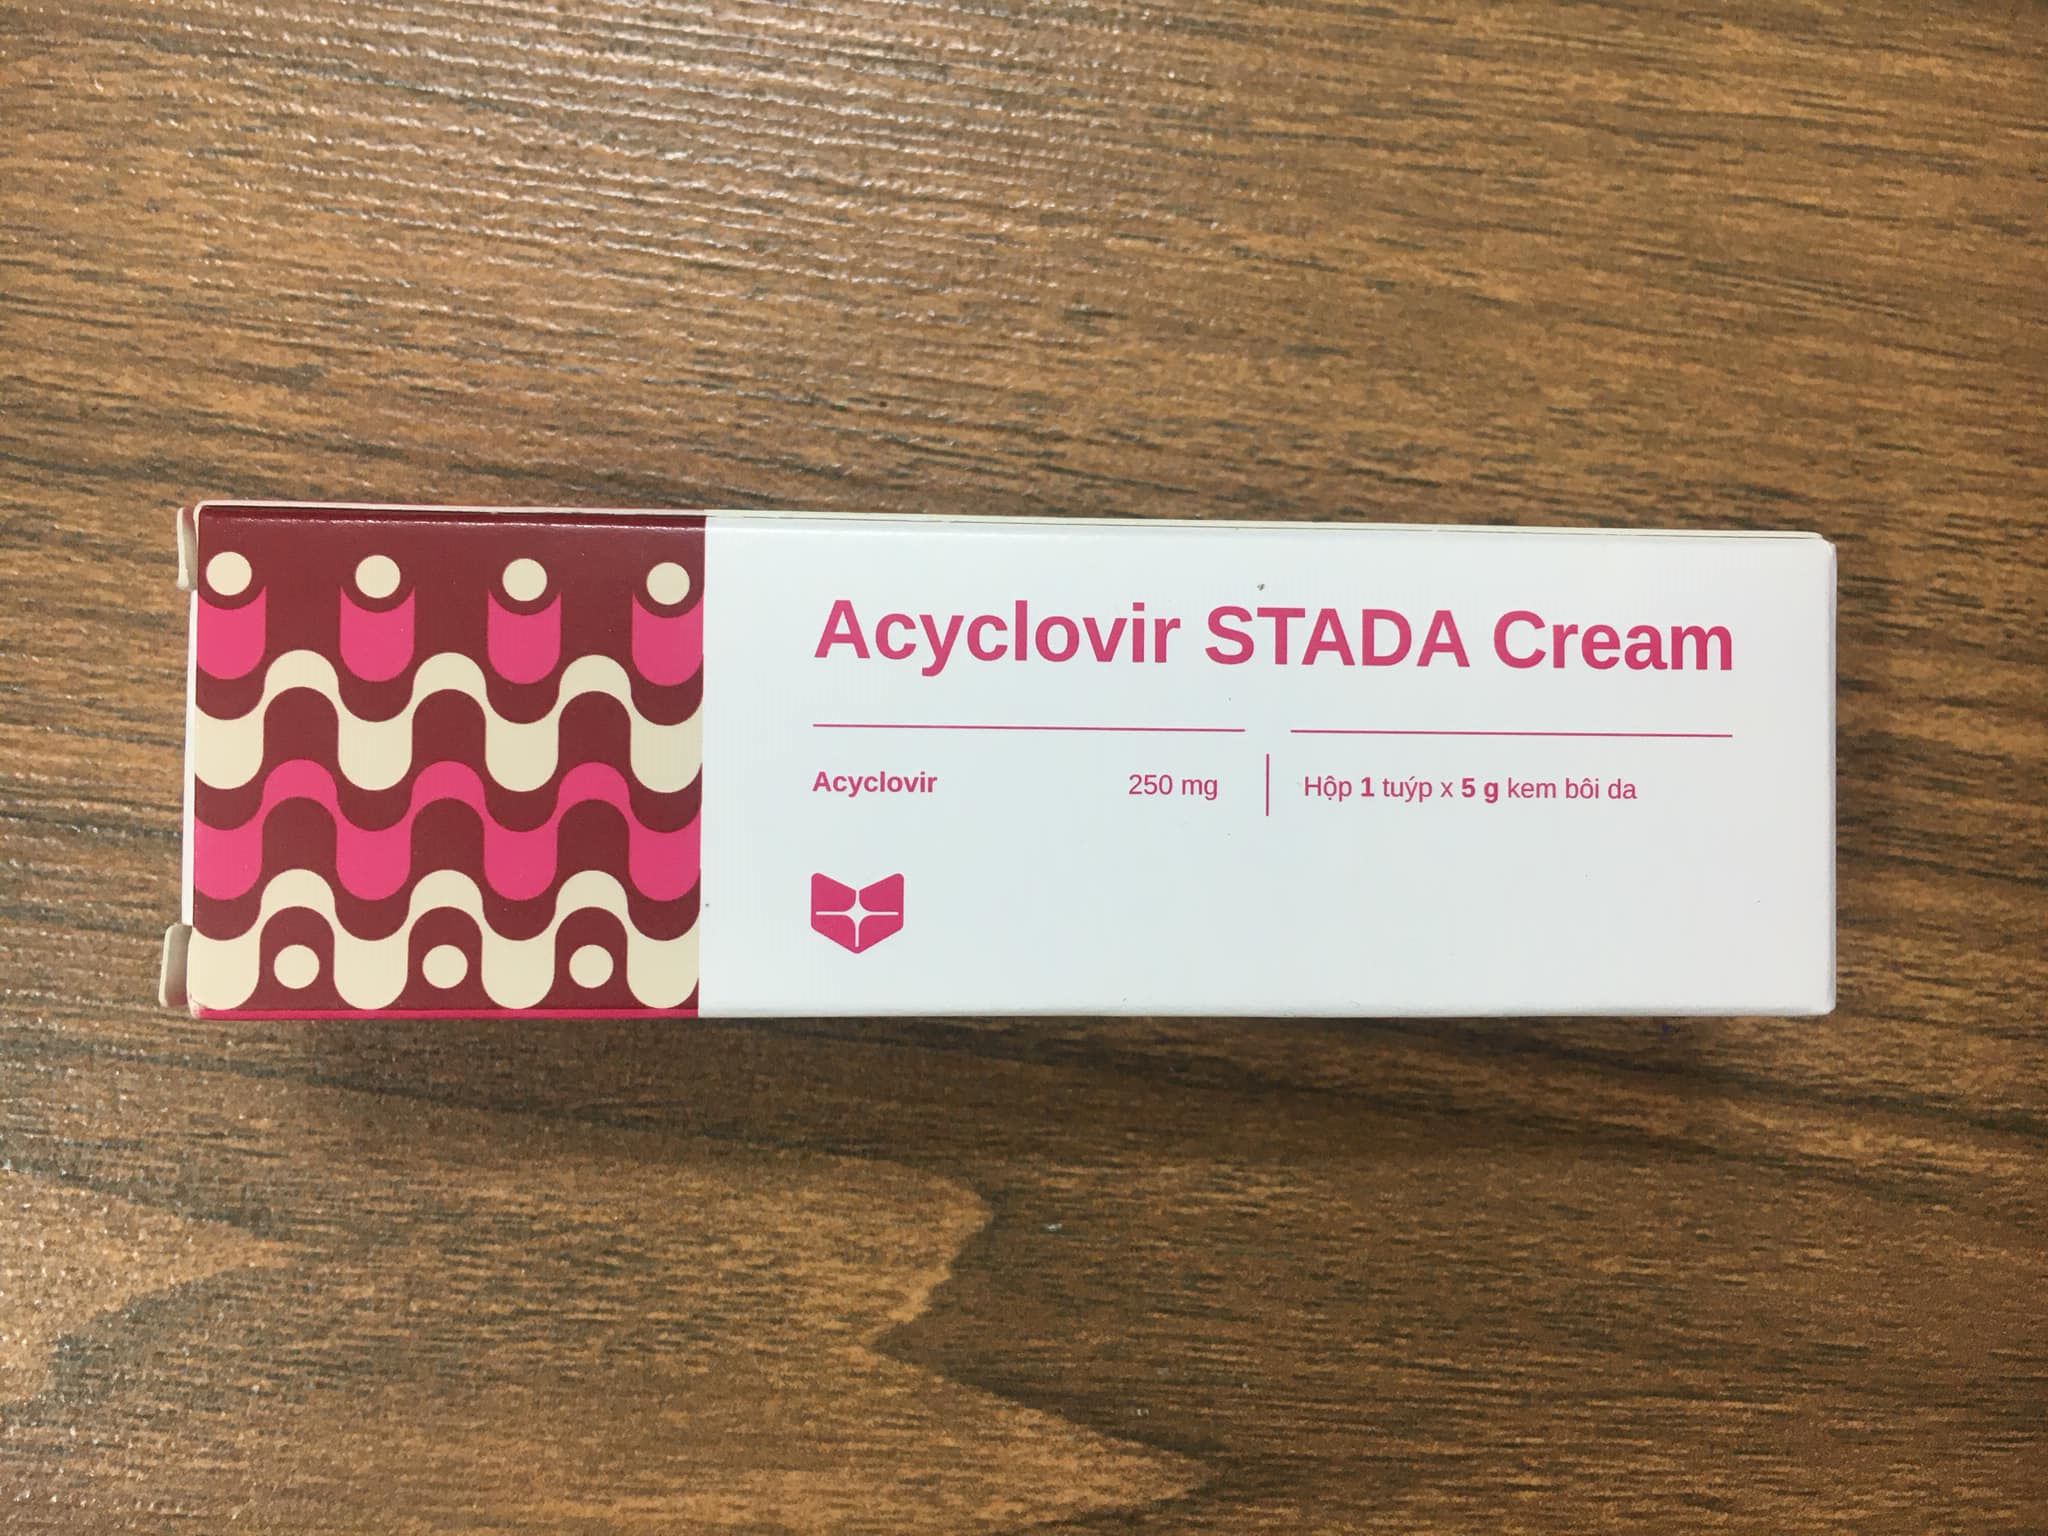 Acyclovir Stada cream